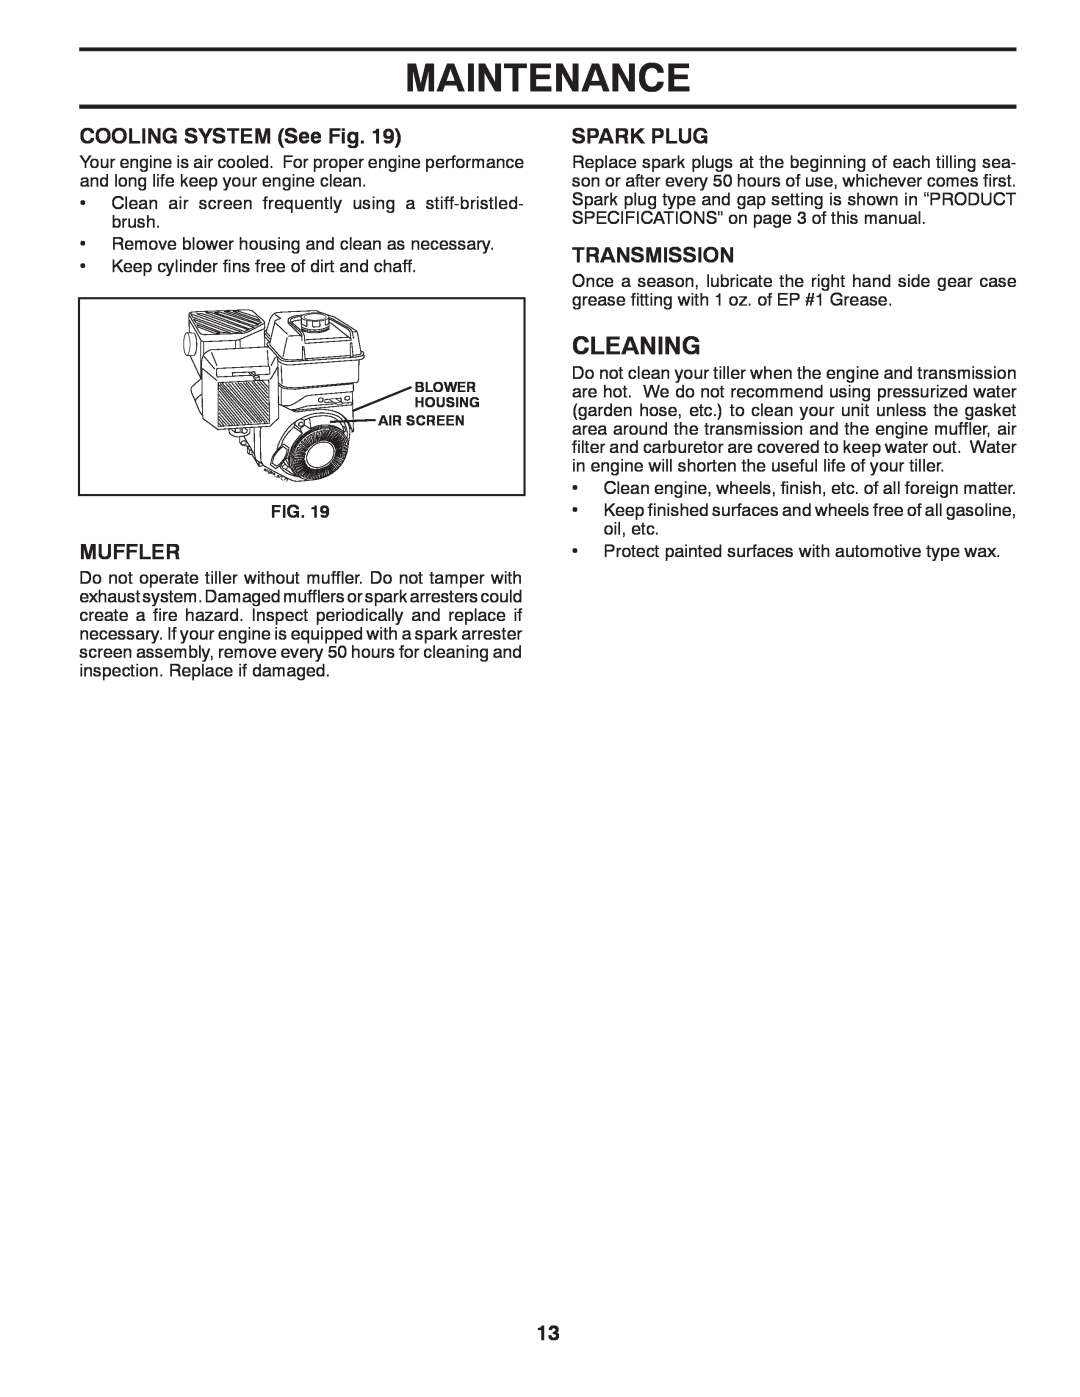 Poulan PRRT850 manual Cleaning, COOLING SYSTEM See Fig, Muffler, Spark Plug, Transmission, Maintenance 